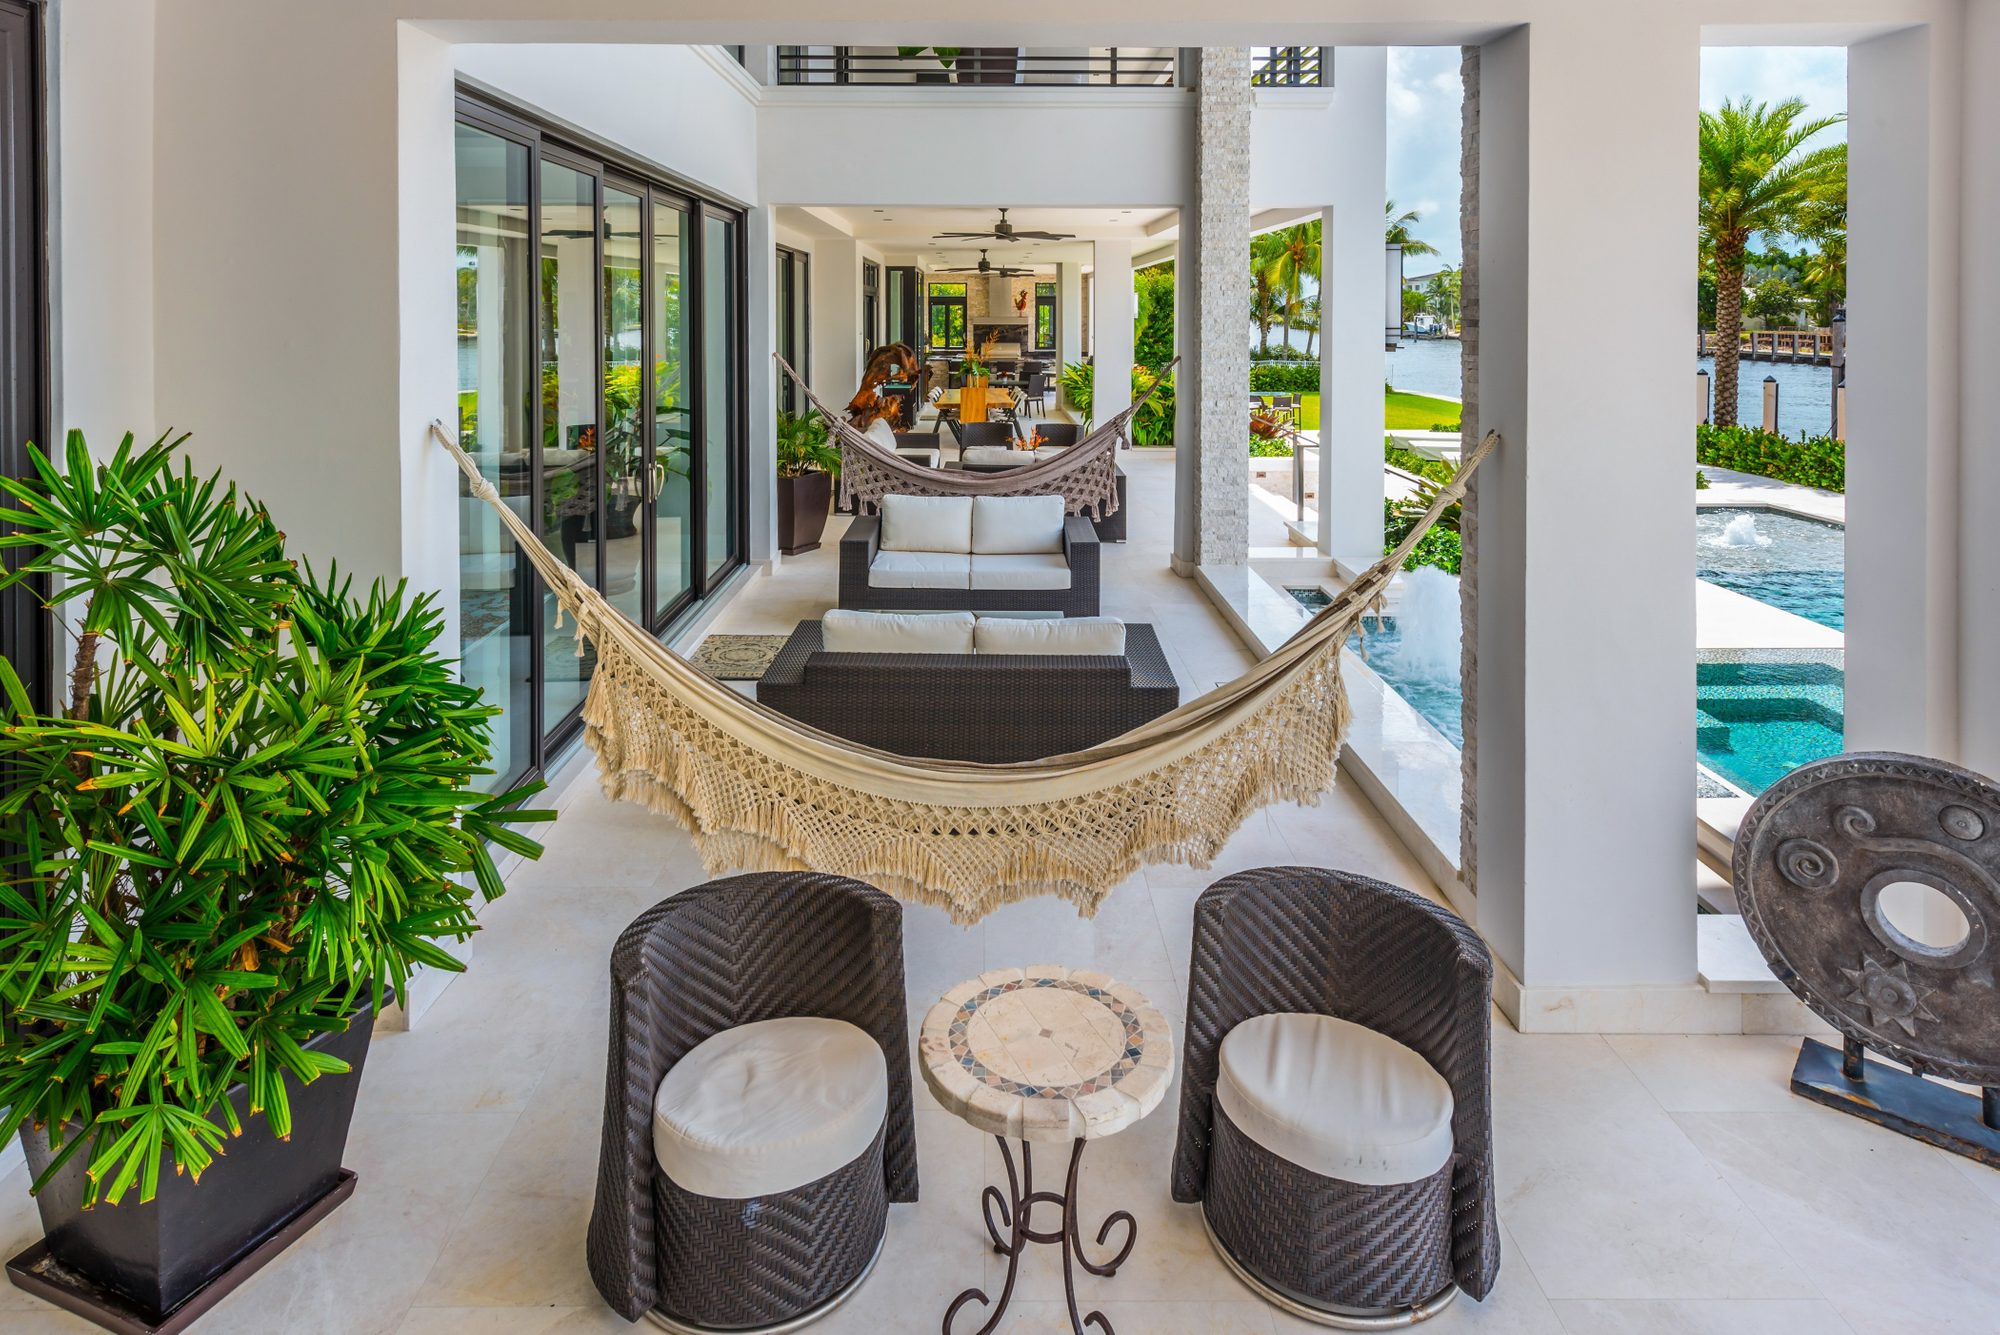 Bohemian inspired modern wicker patio furniture with hammocks.